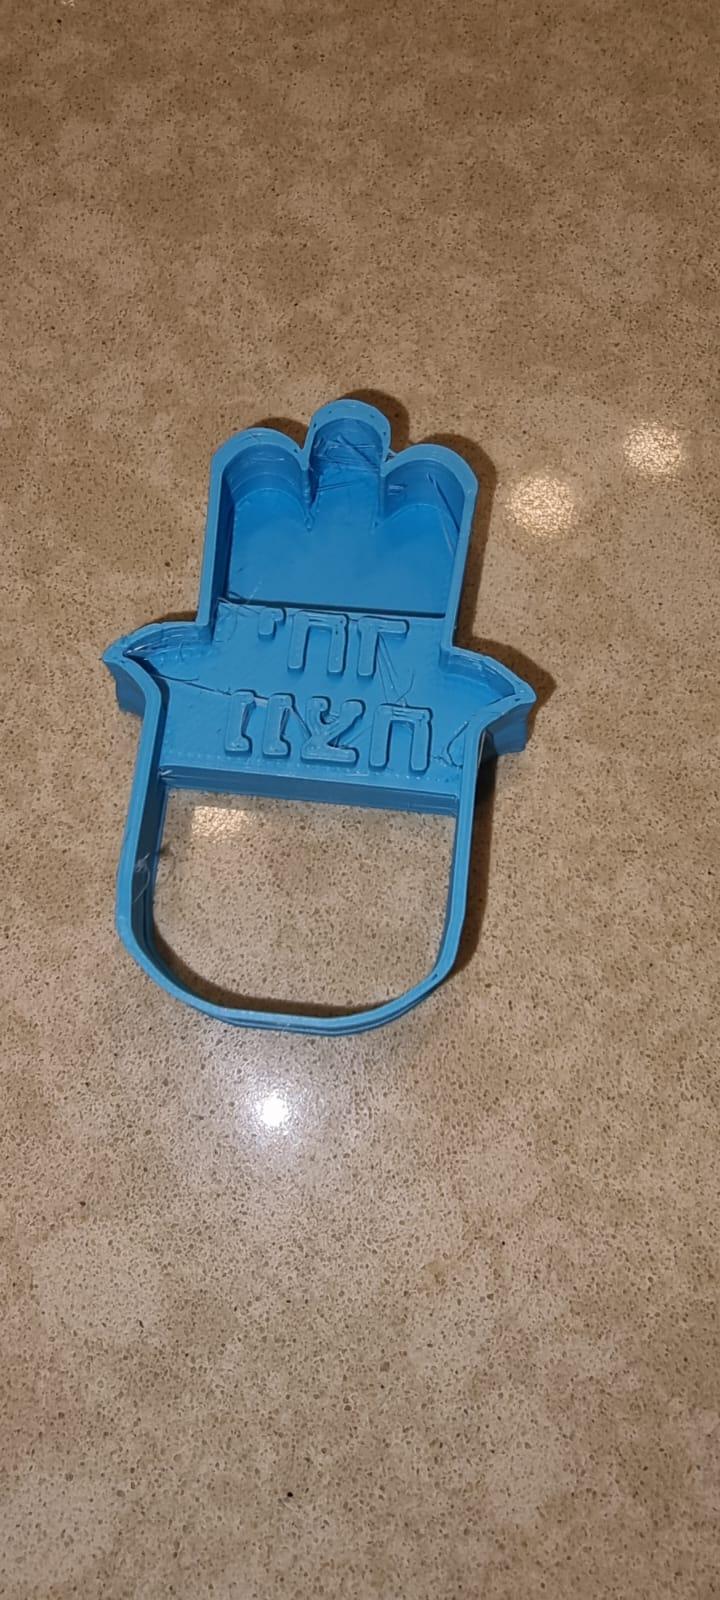 am israel chai/ yahad nenatzeach cookie cutters 3d model